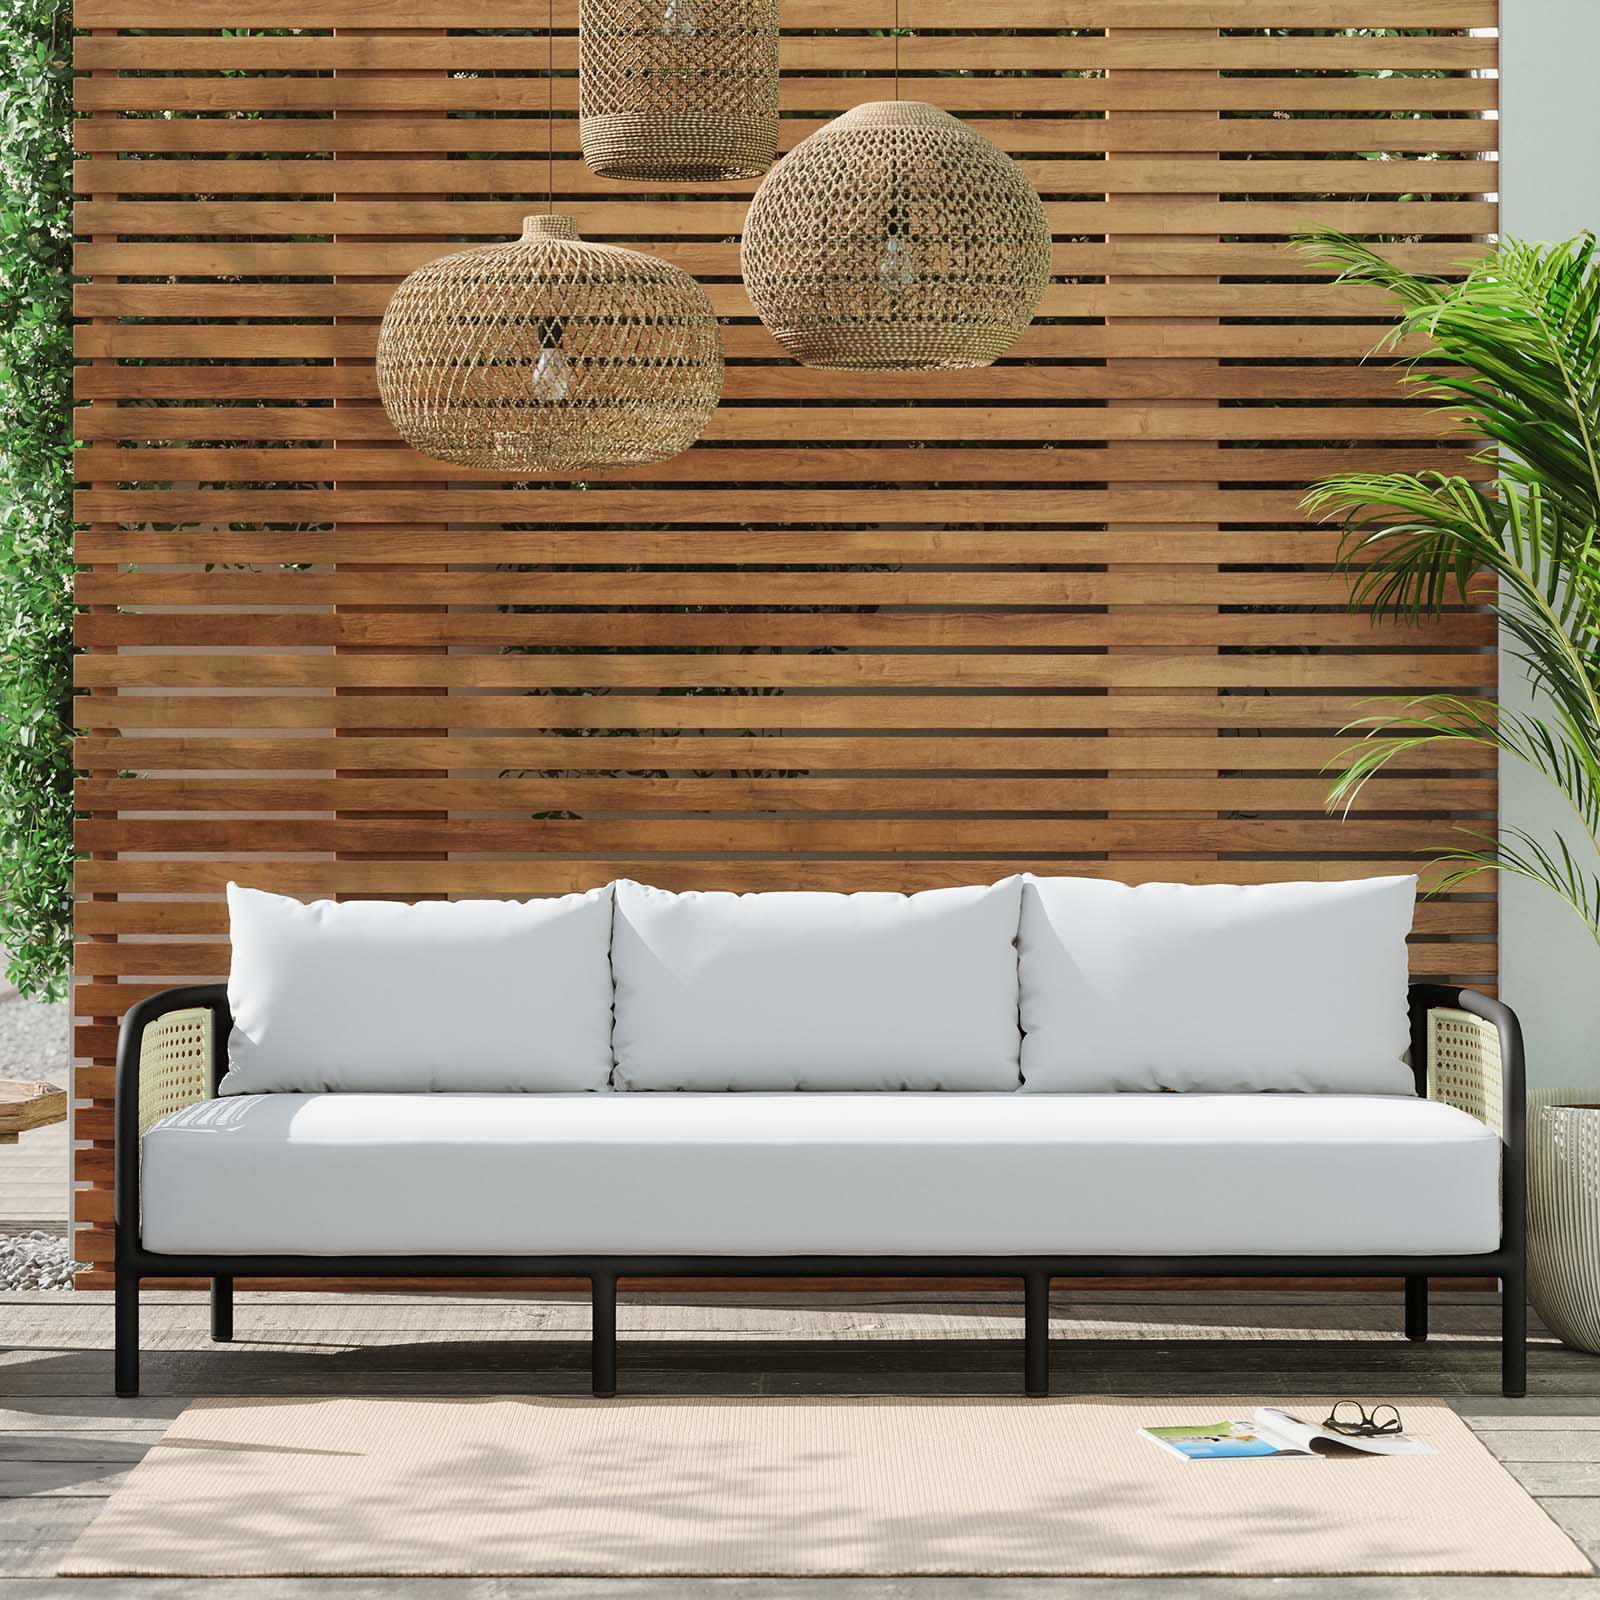 Hanalei 4-Piece Outdoor Patio Furniture Set